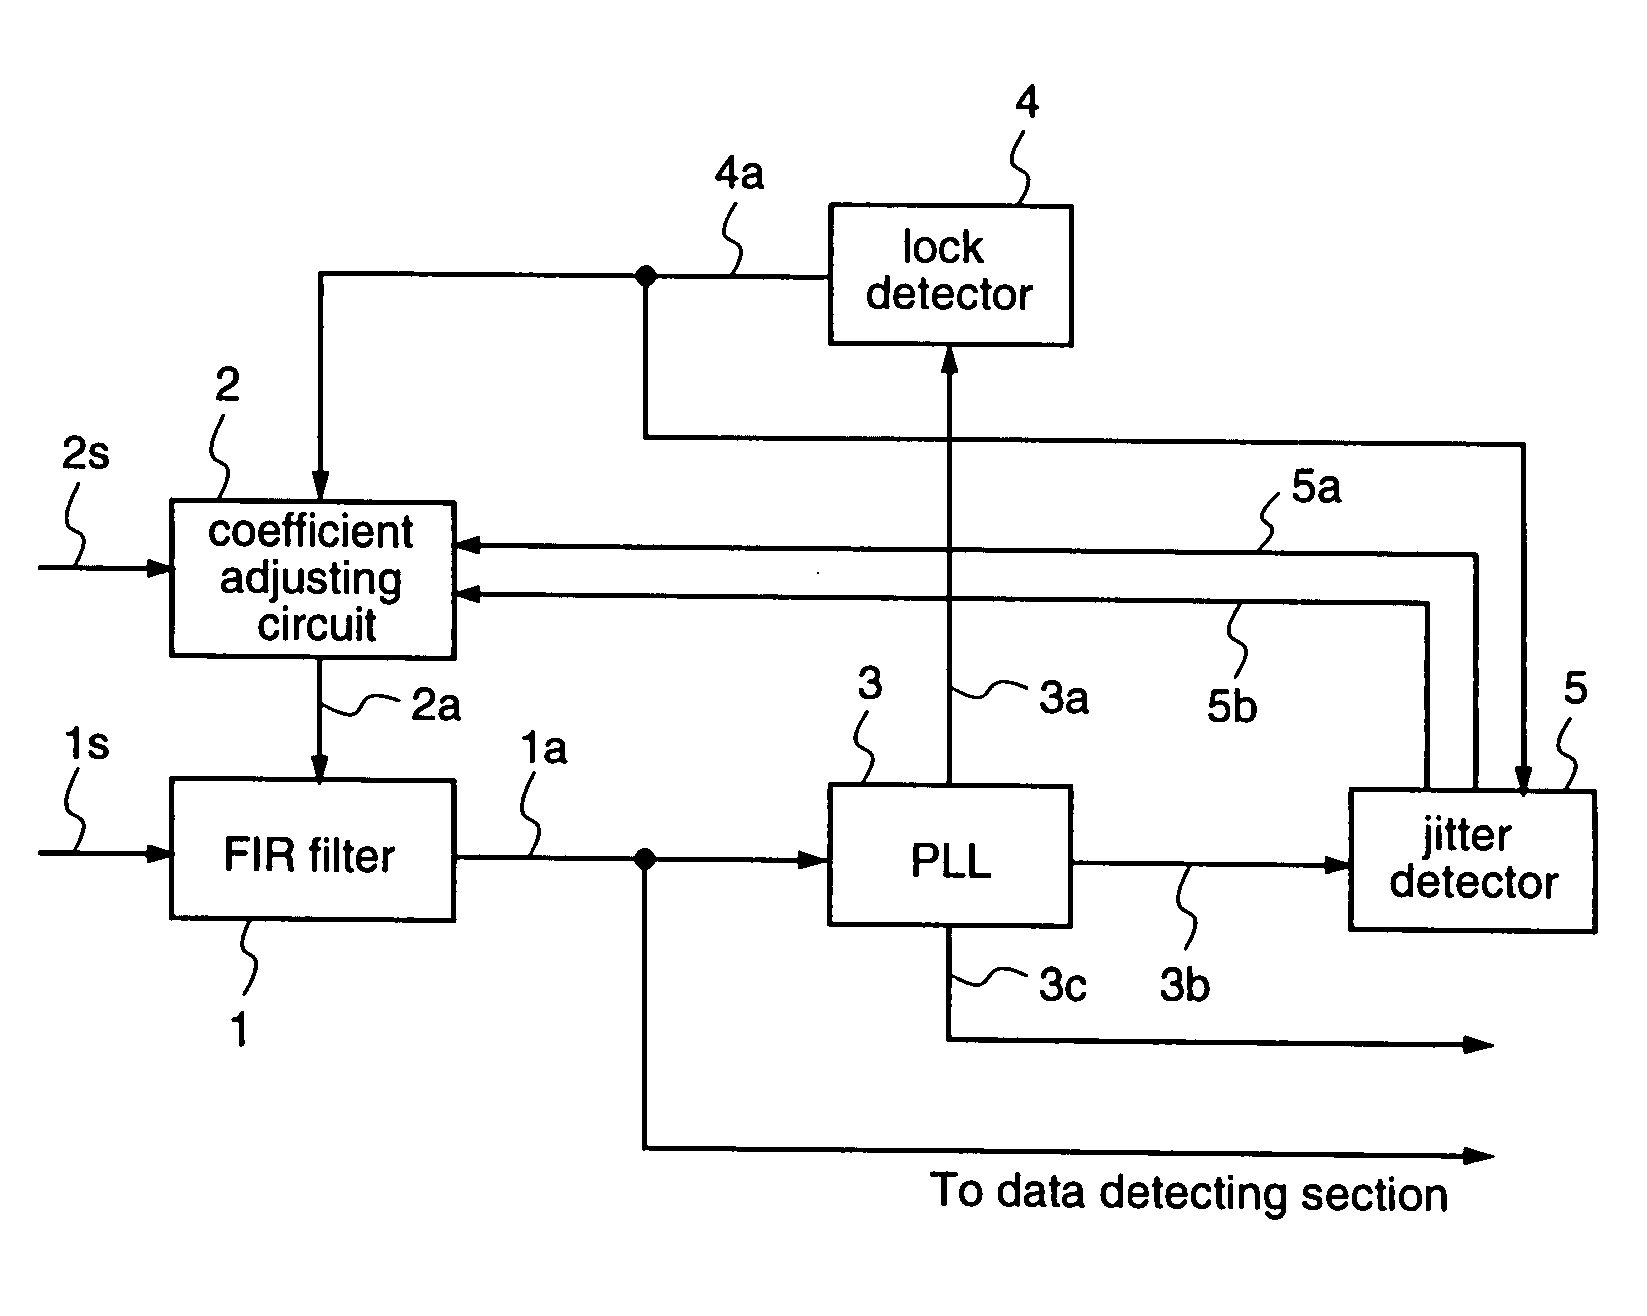 Filter coefficient adjusting circuit